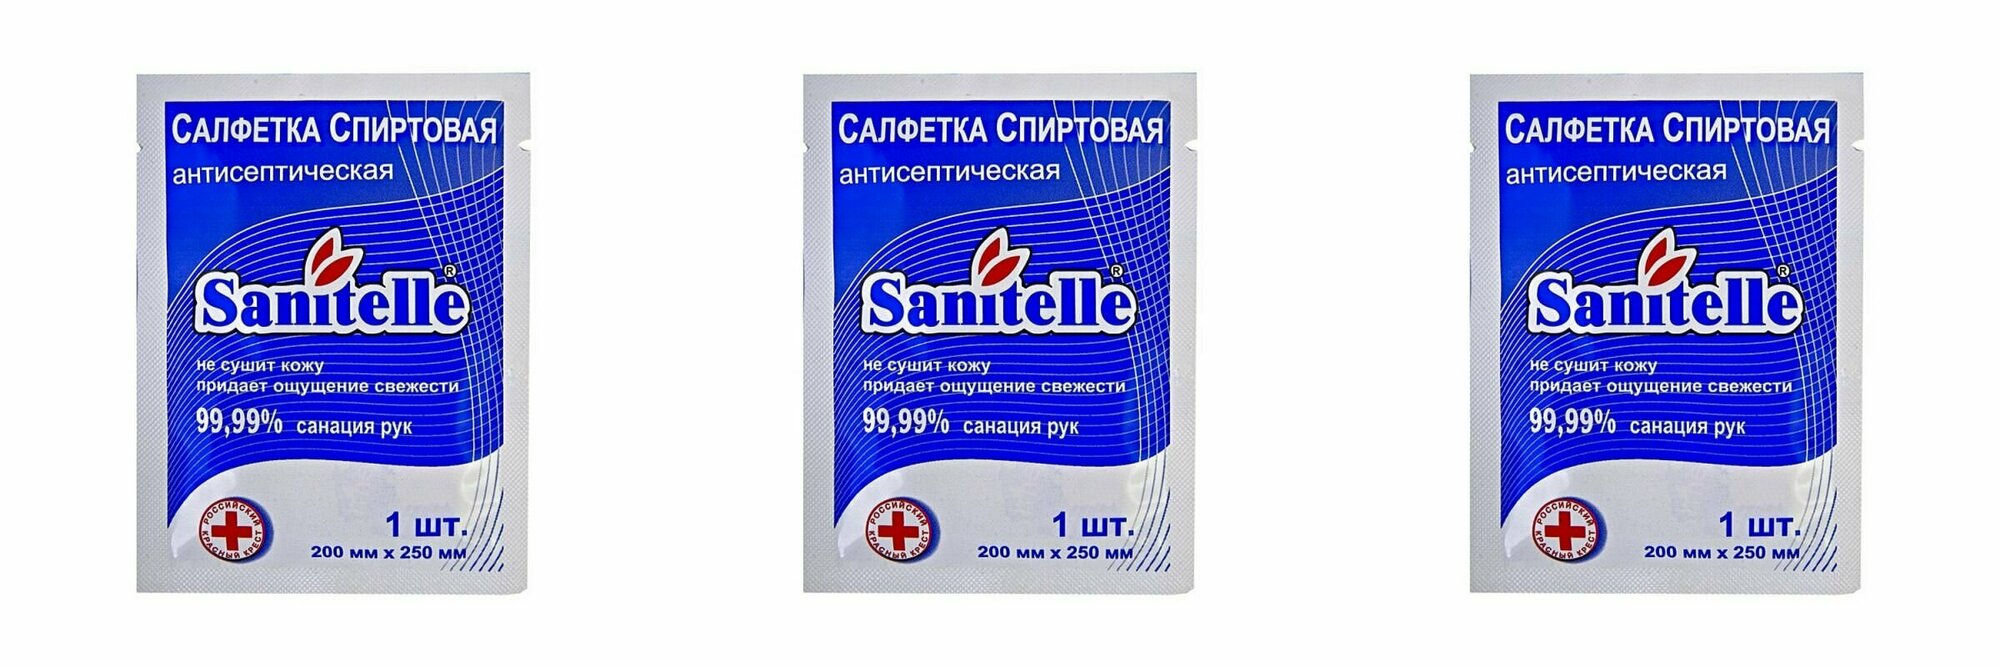 Sanitelle Cалфетка для рук антисептическая, 3 шт